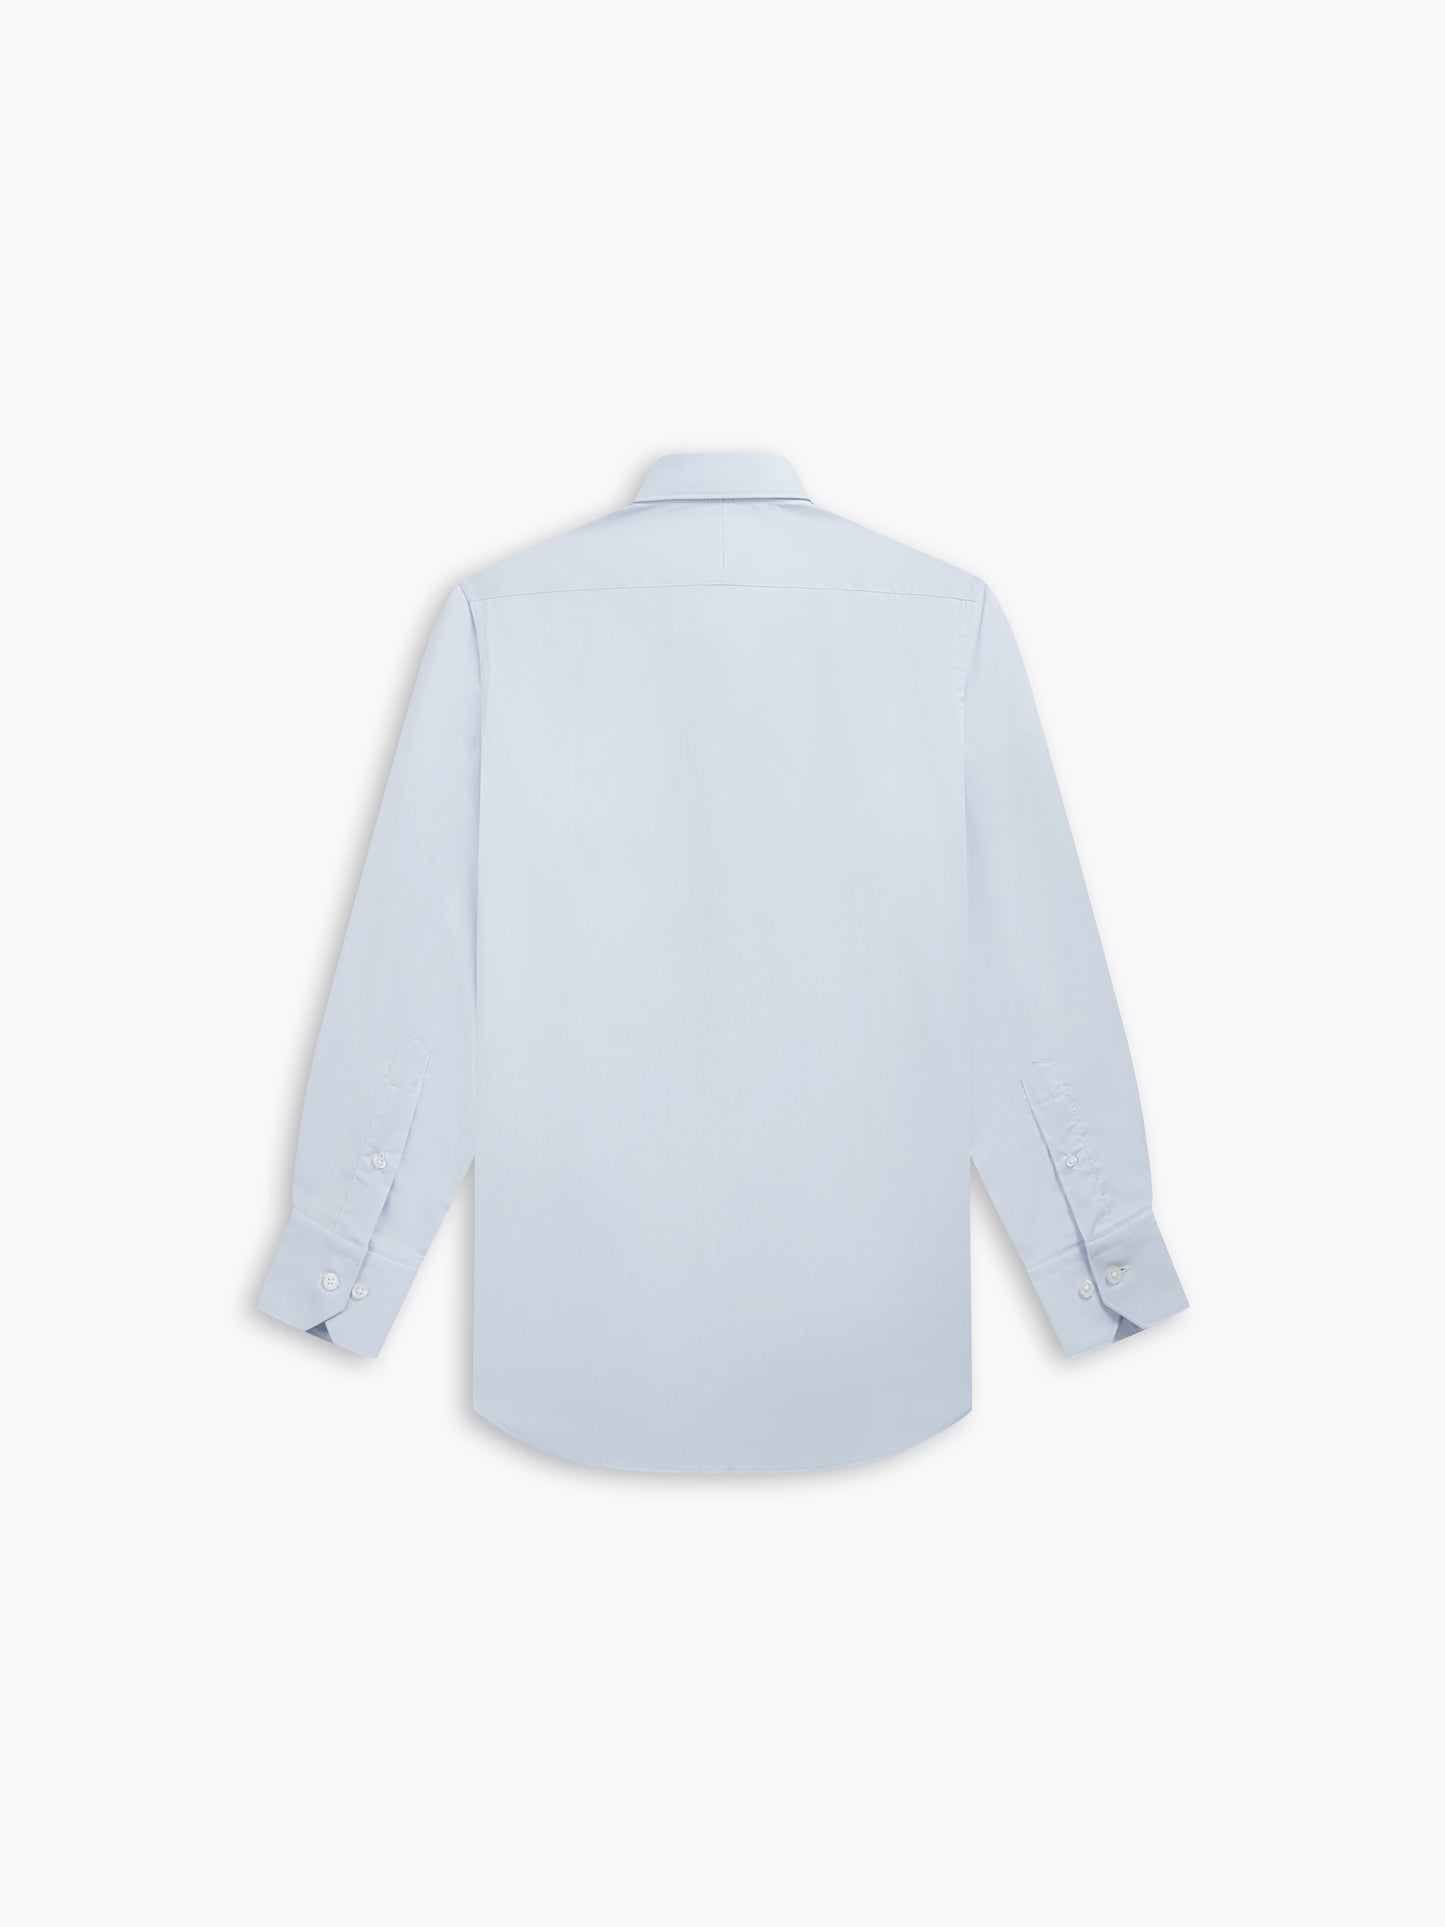 Light Blue Stretch Twill Super Fitted Single Cuff Classic Collar Shirt